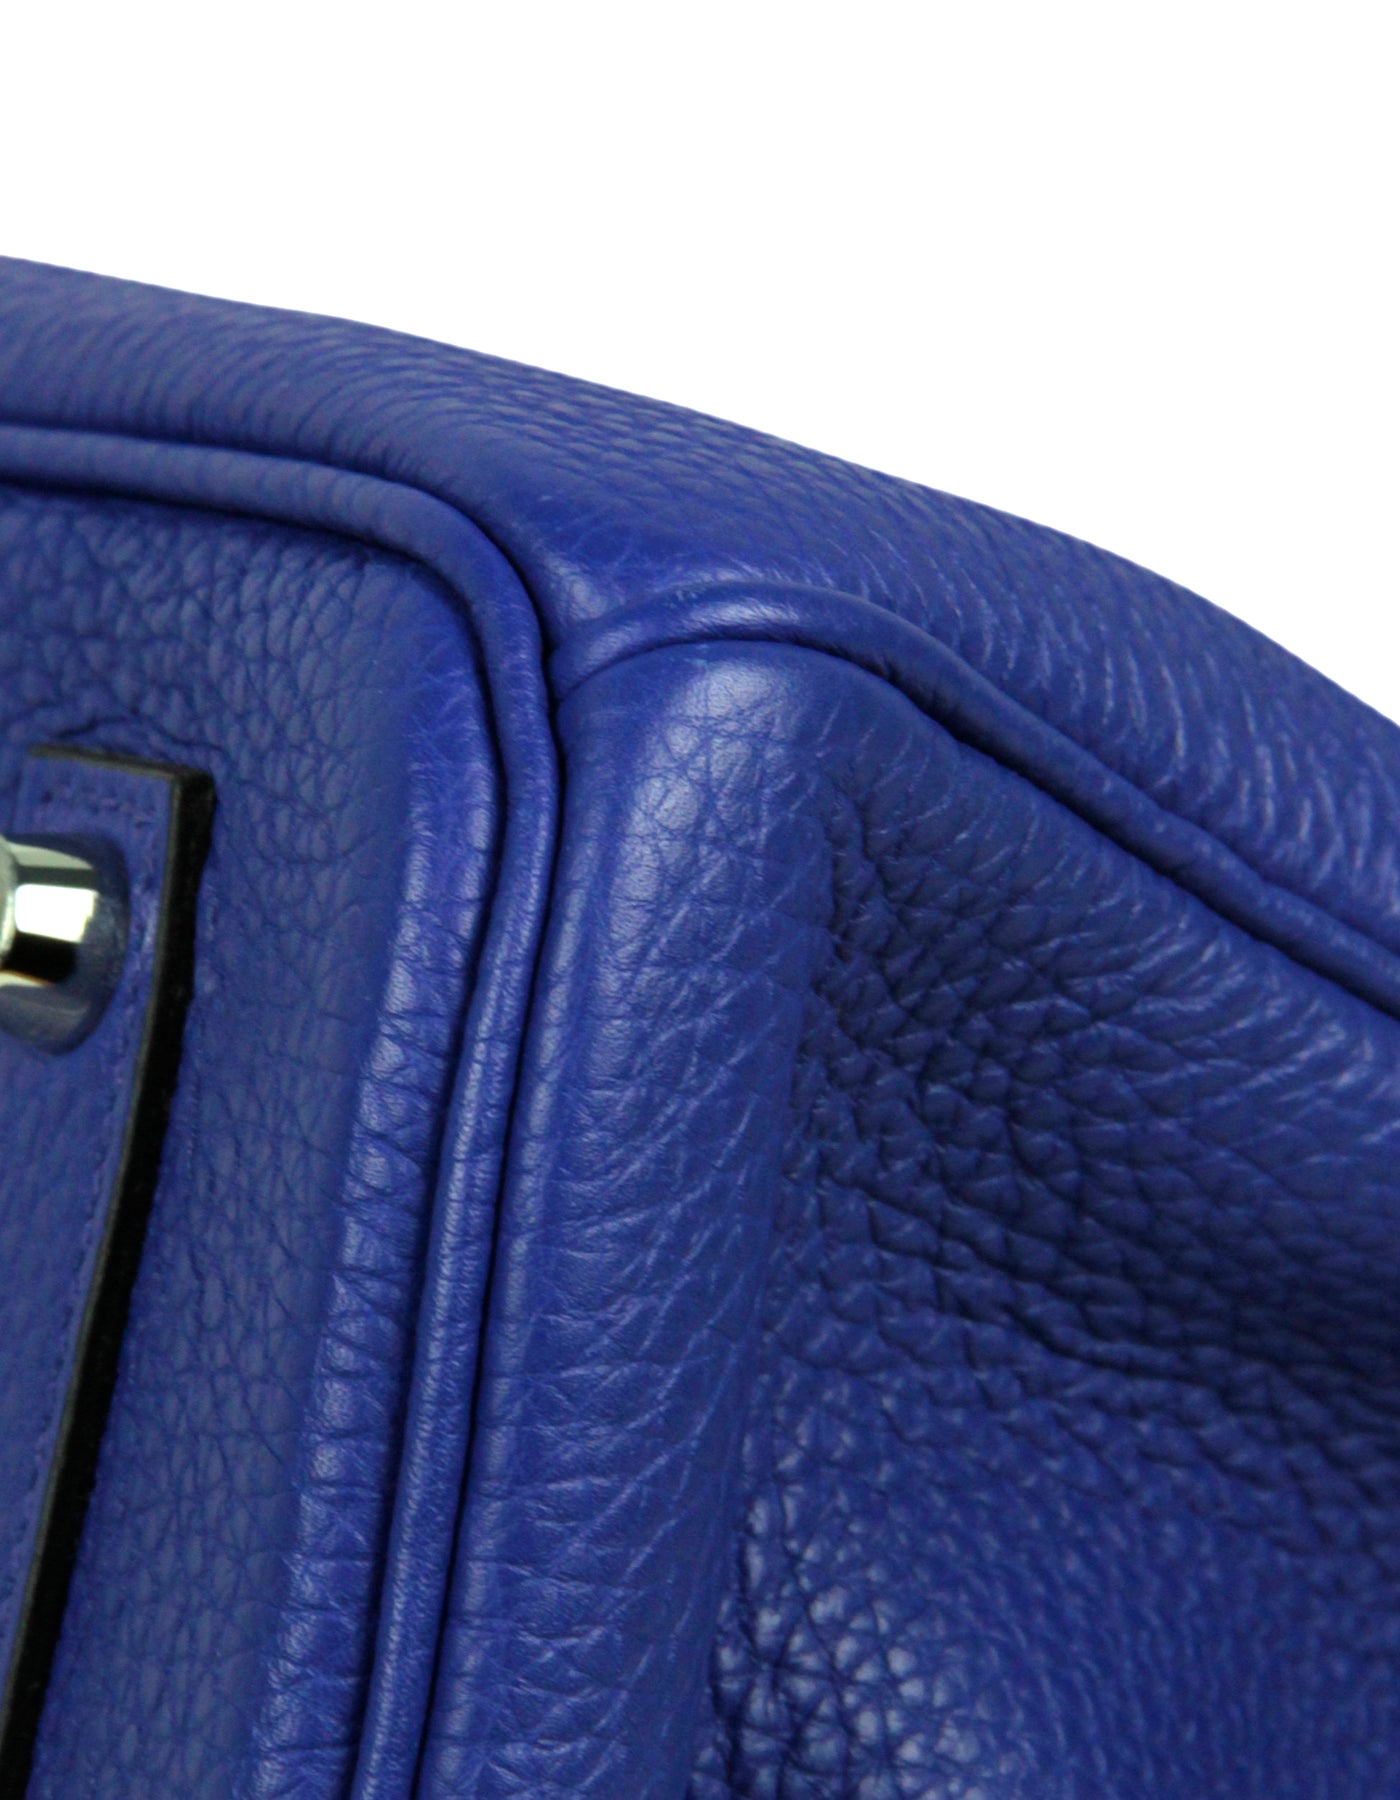 Hermes Togo 35cm Birkin Bag Electric Blue - Luxury In Reach